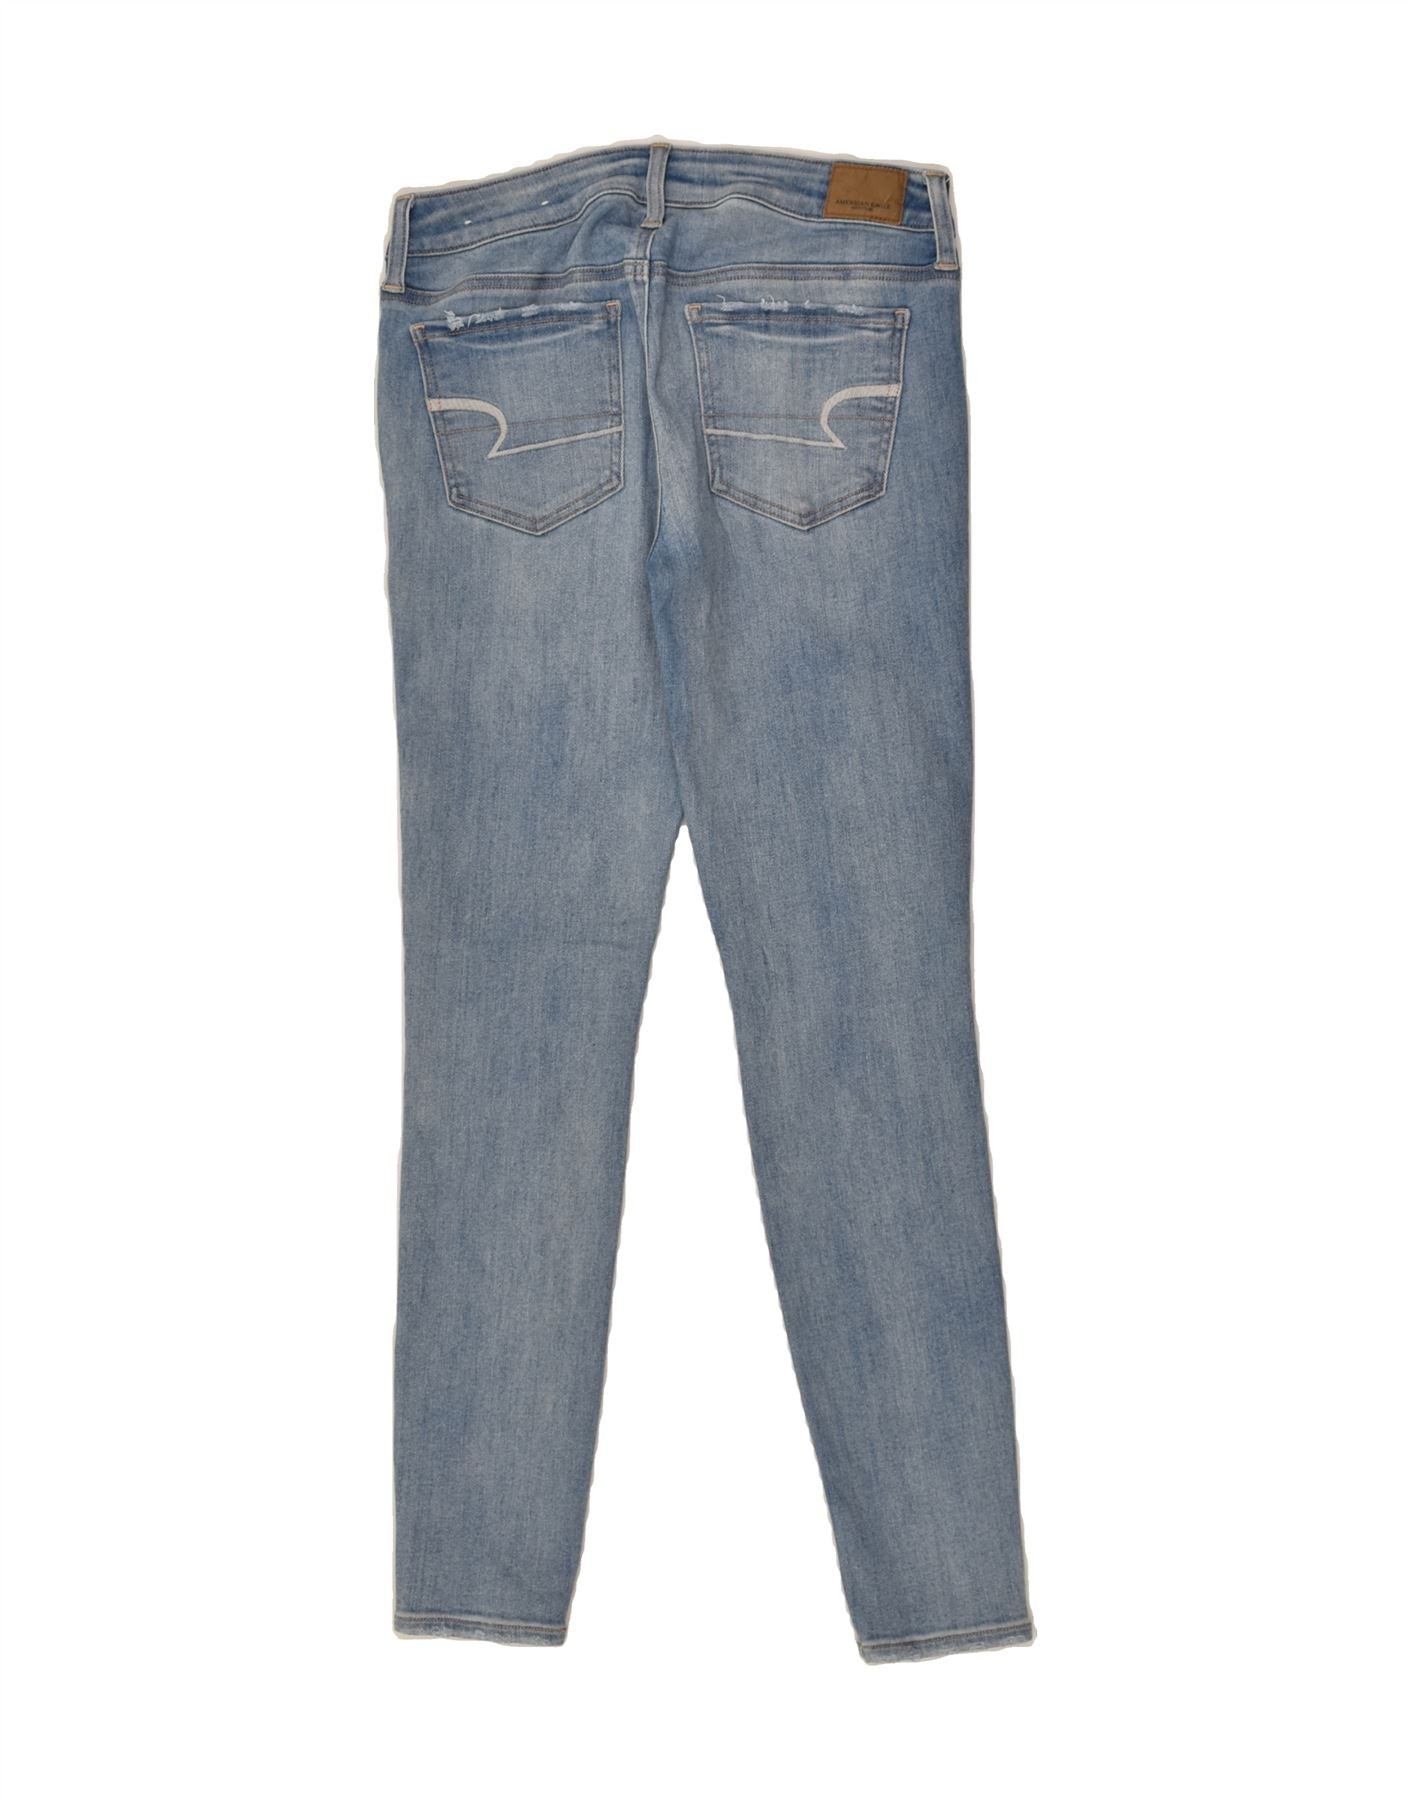 AMERICAN EAGLE Womens Jegging Jeans US 8 Medium W29 L28 Blue